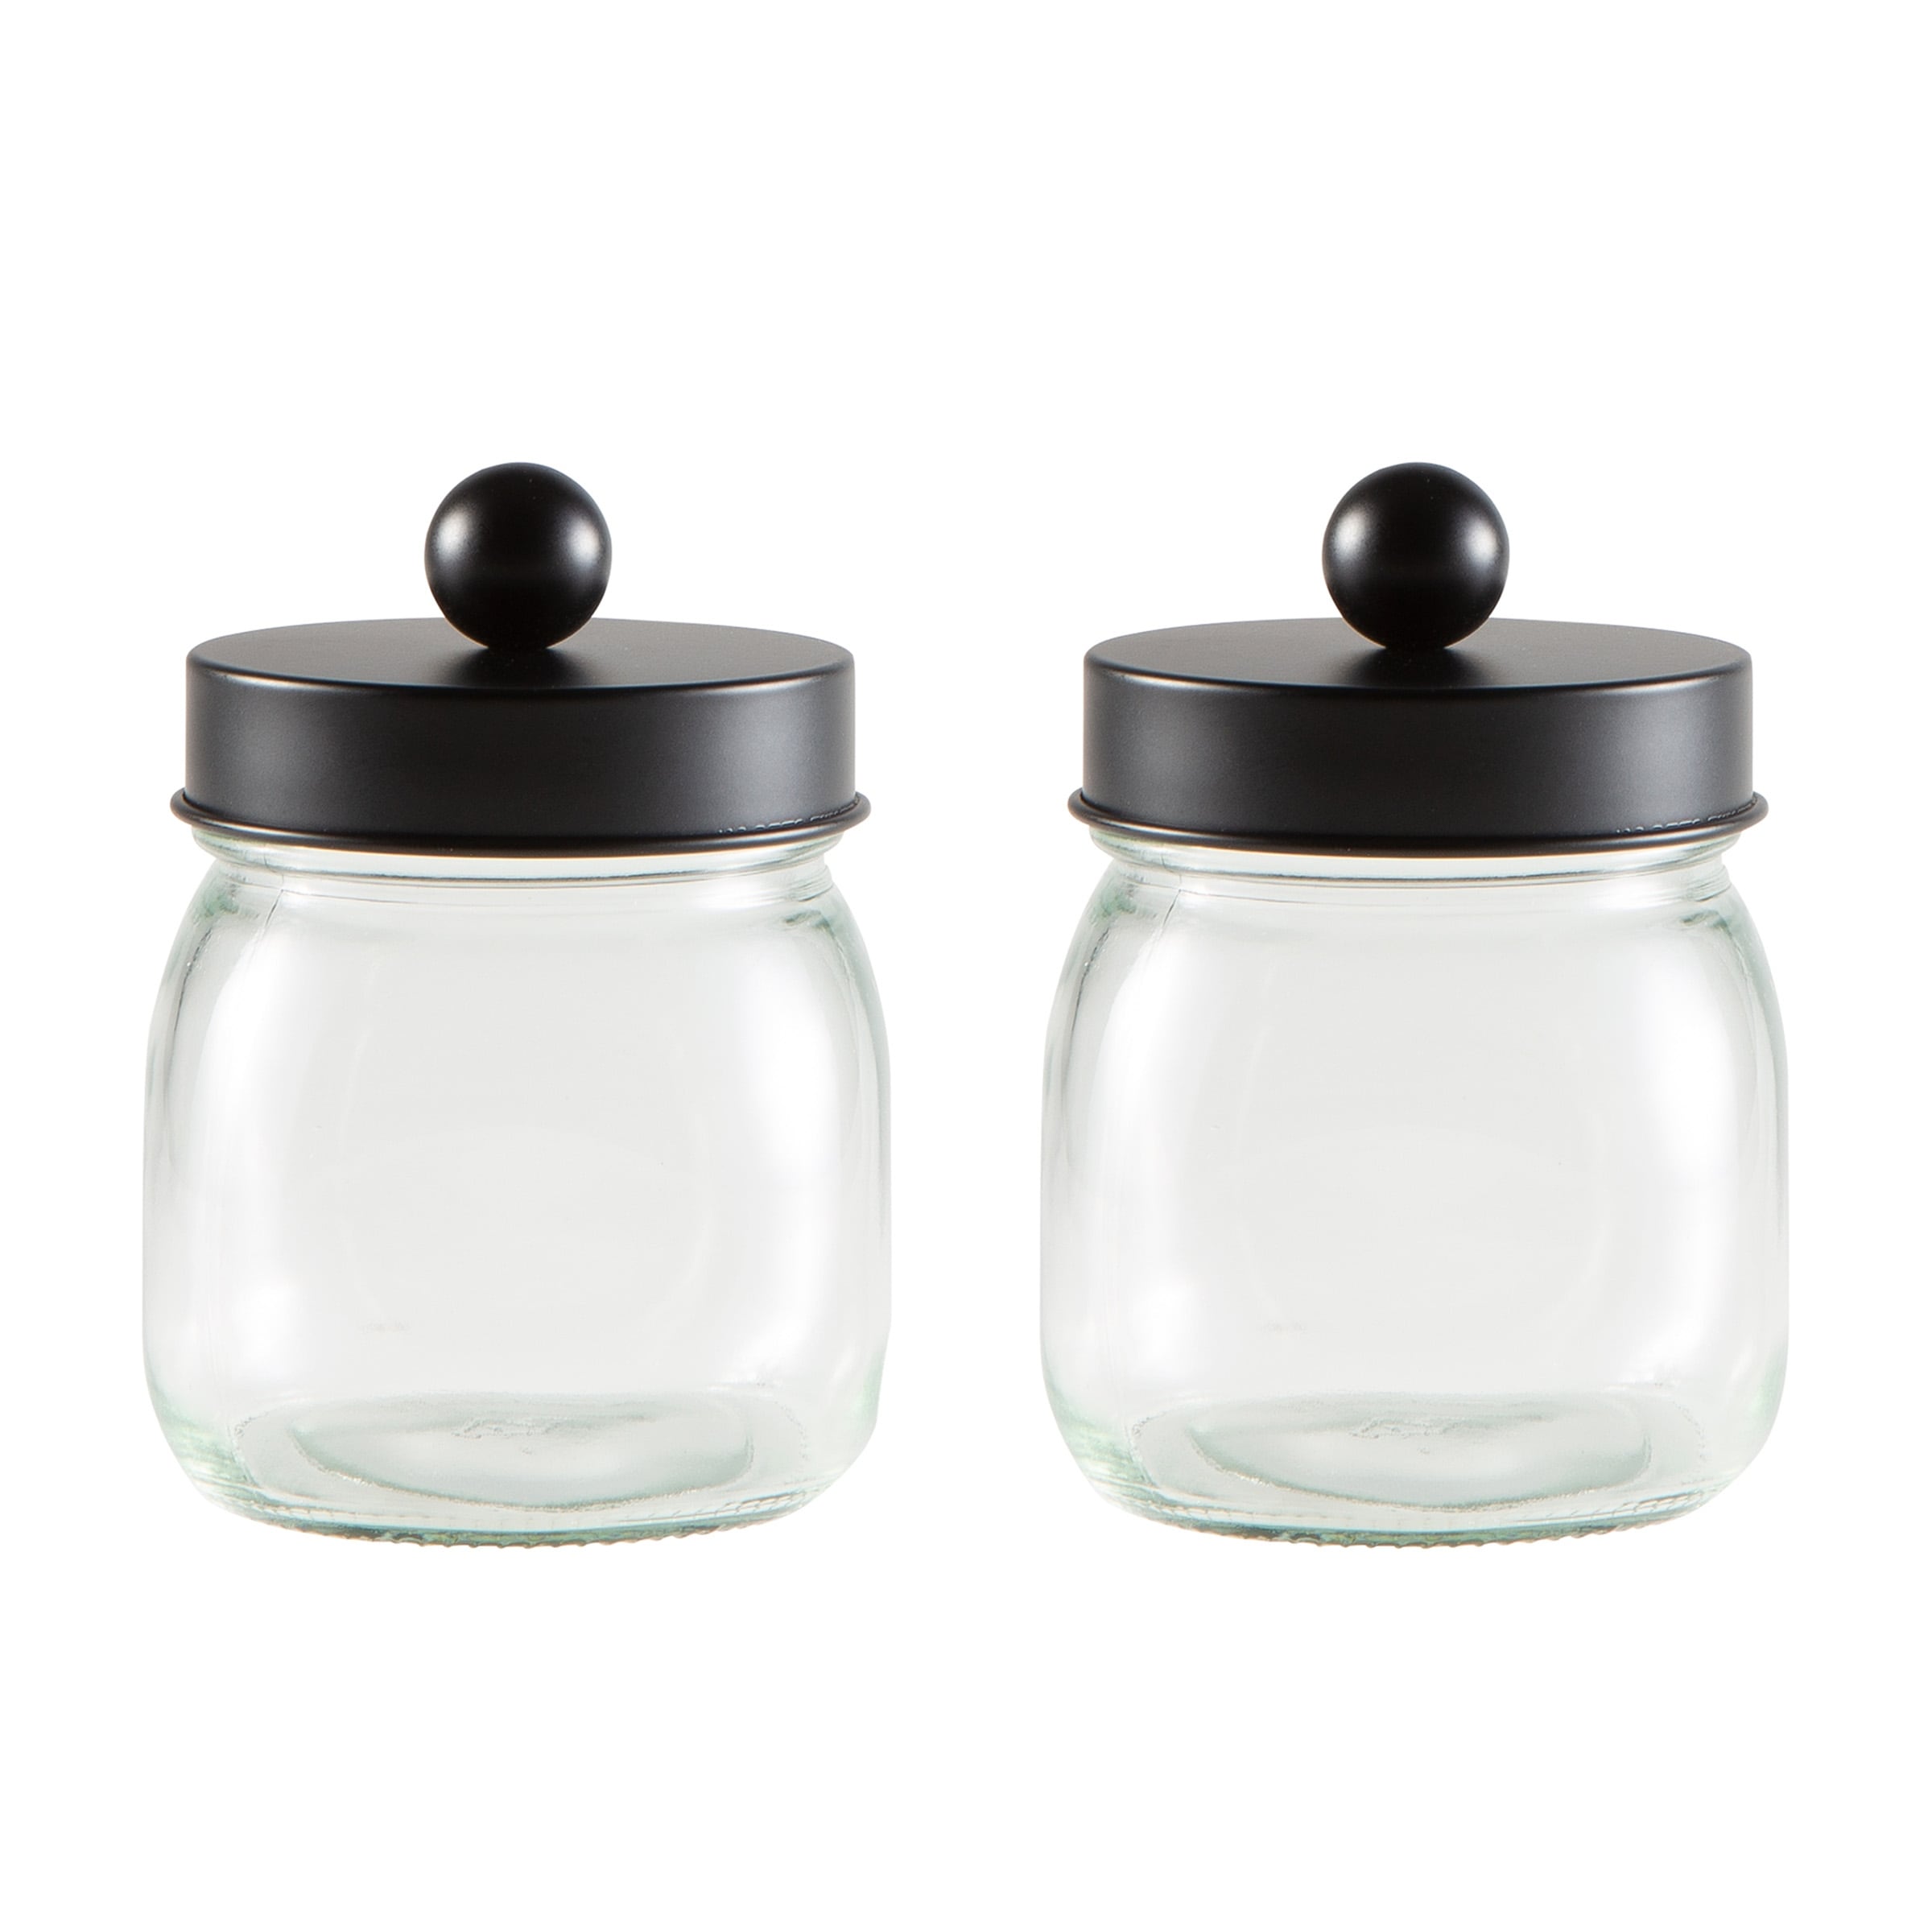 Home-Complete 5-Piece Mason Jar Bathroom Accessories Set with Lids, Silver